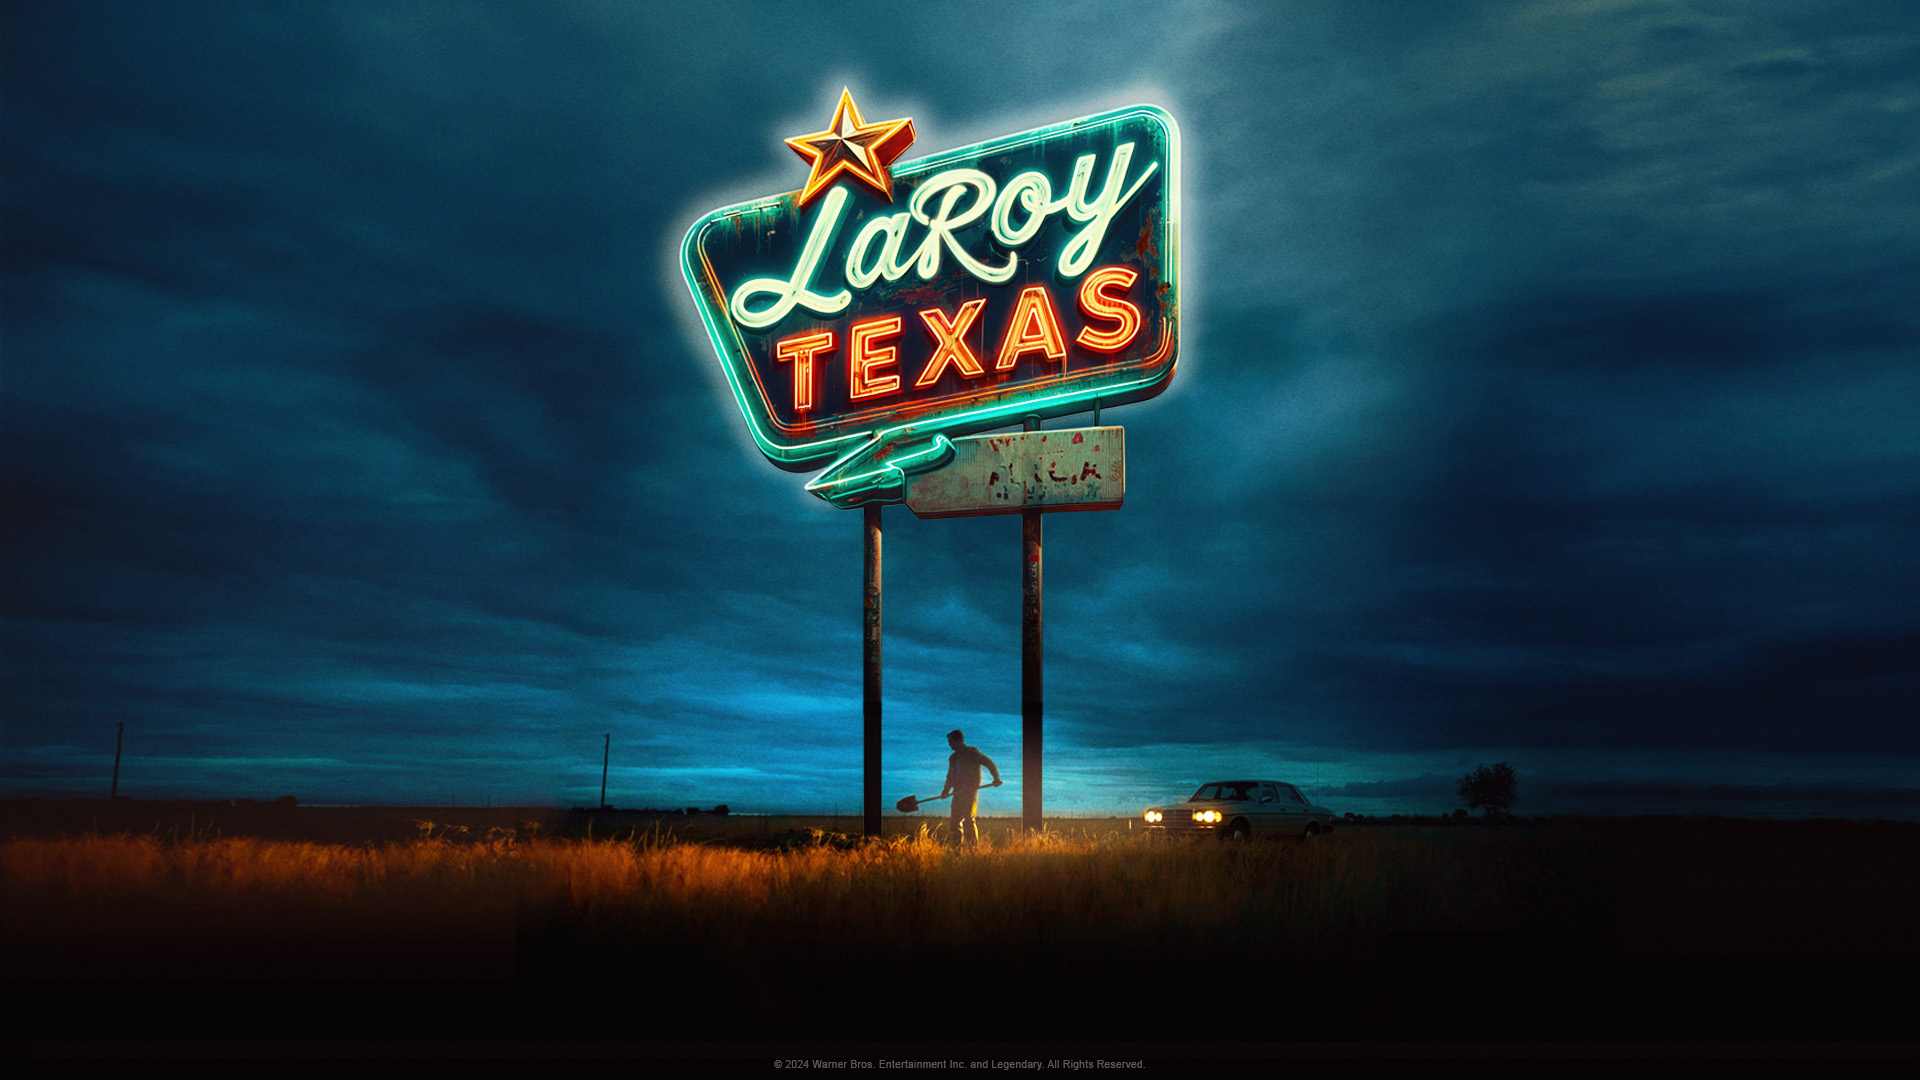 LaRoy Texas - A Moviehooker review